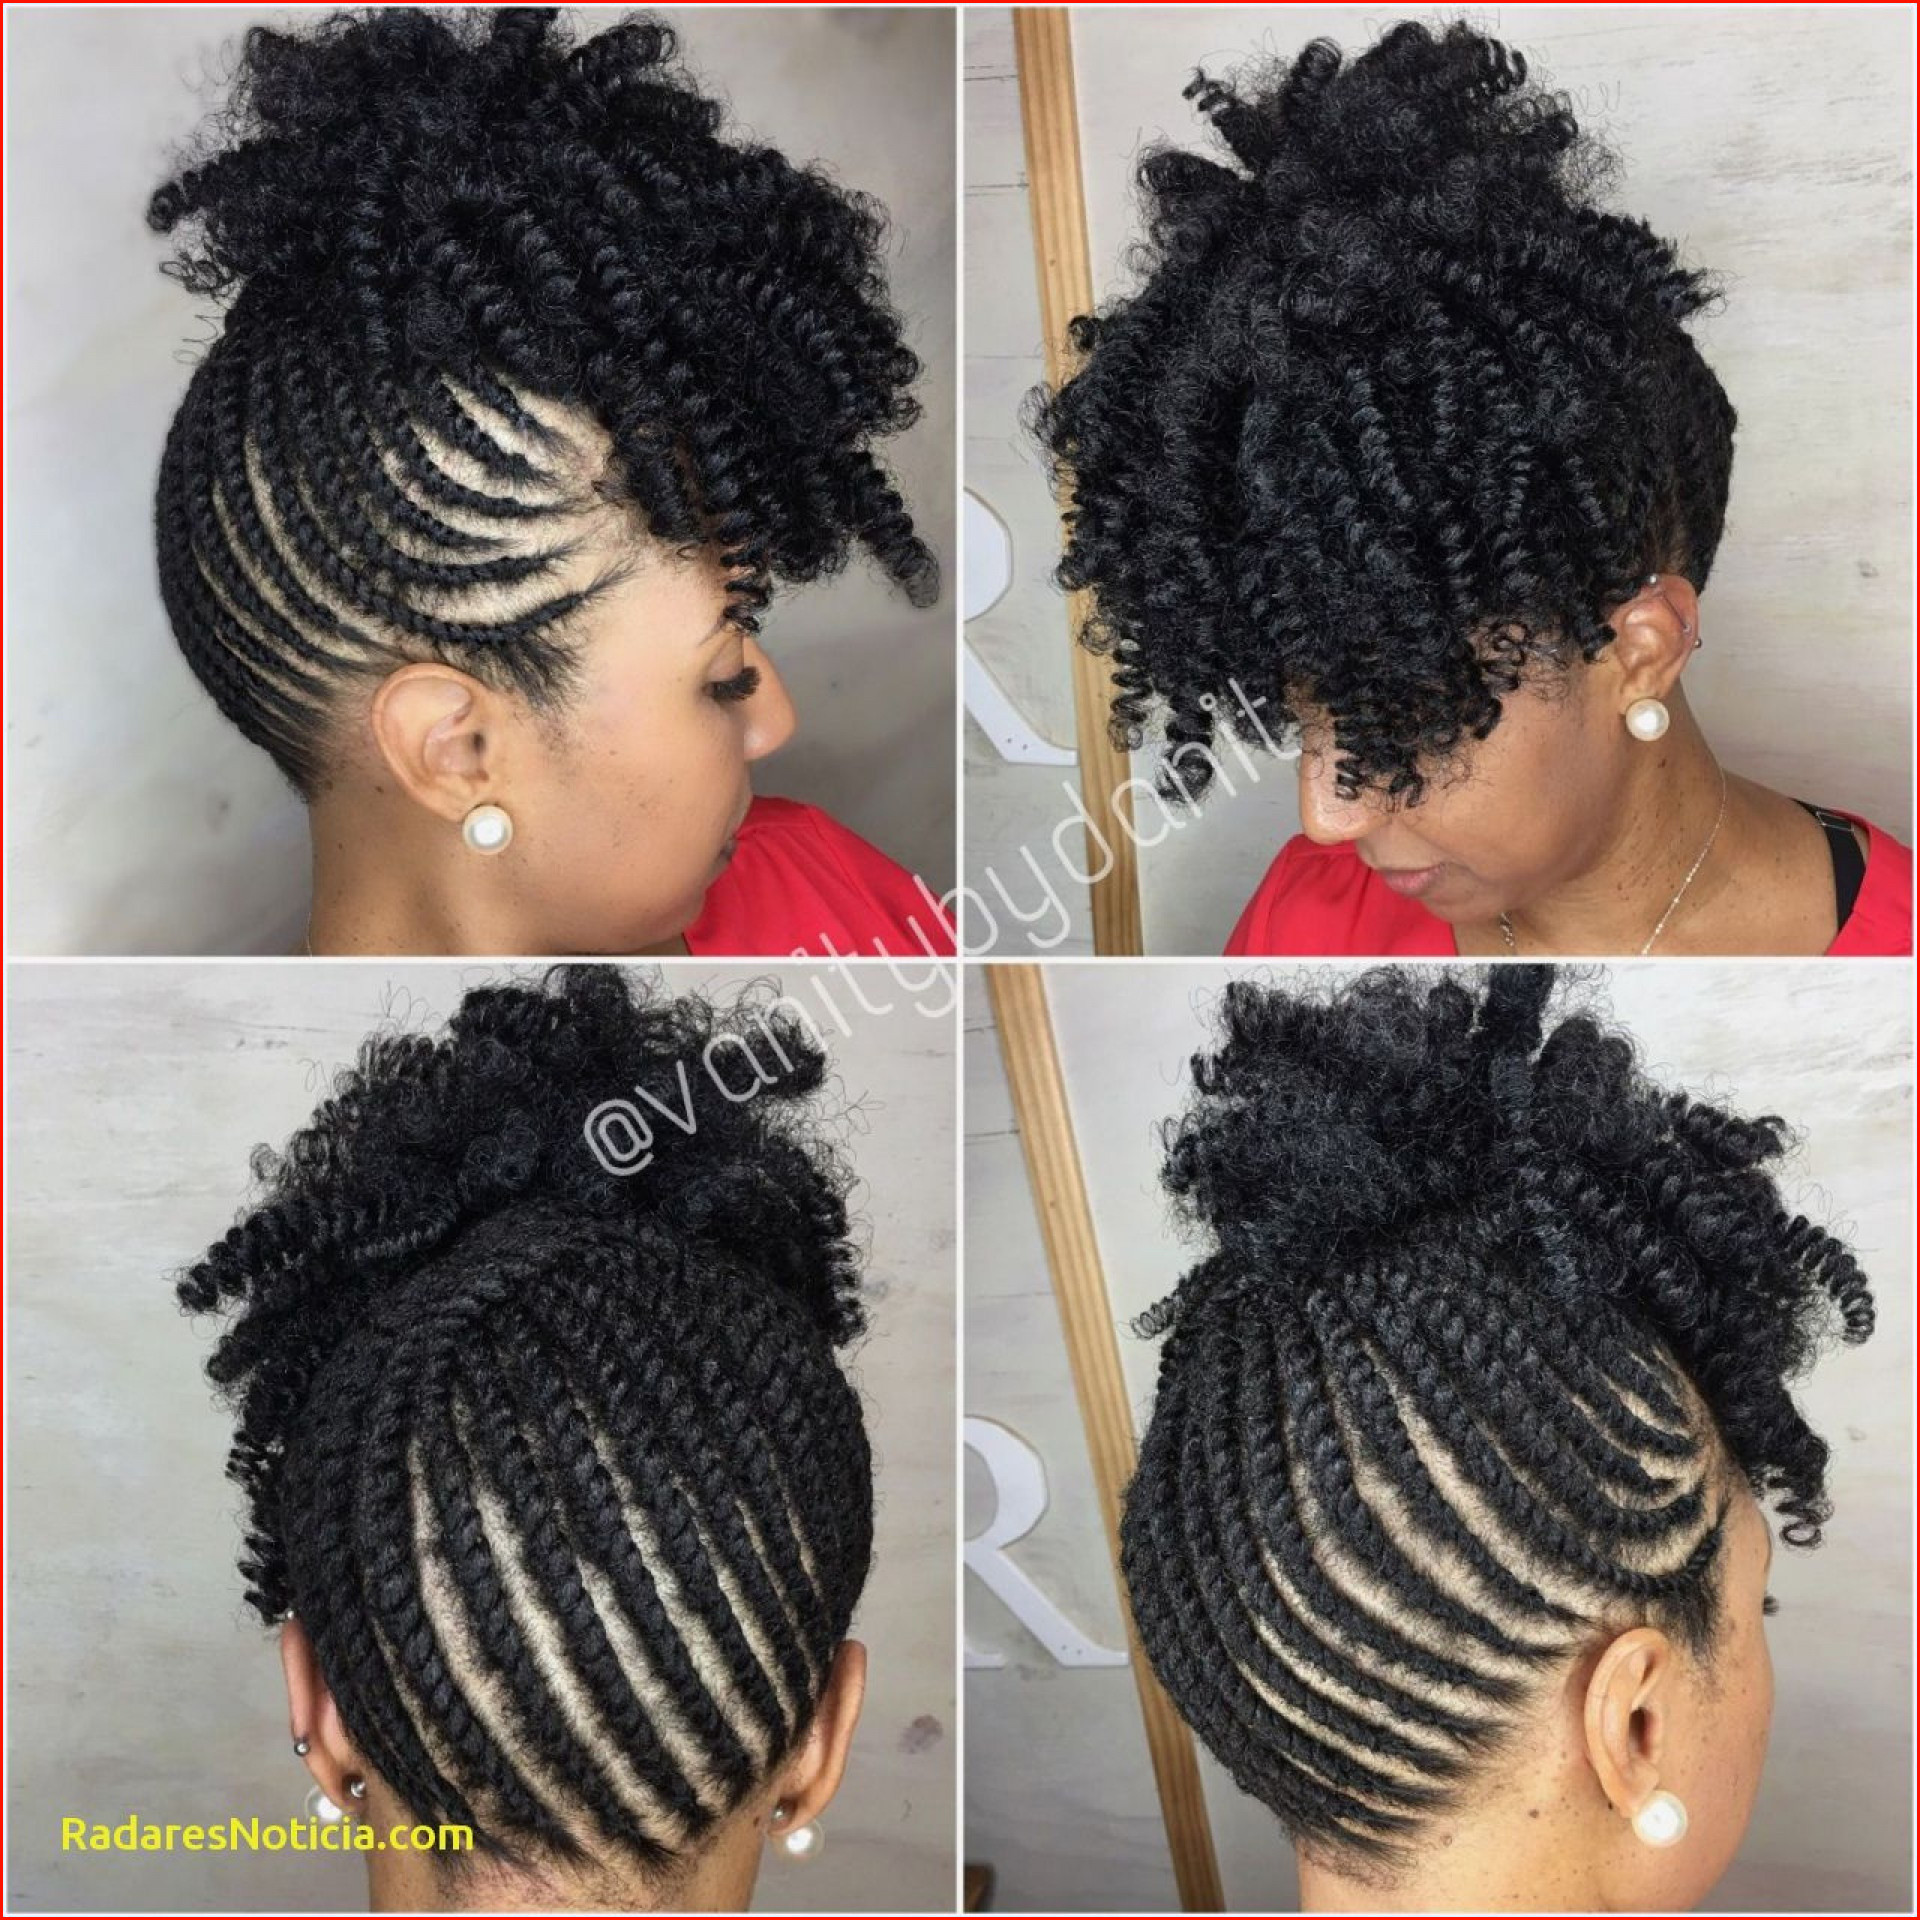 hairstyles black natural hair mohawk styles super best cute black natural braids hairstyles 267610 of black natural braids hairstyles